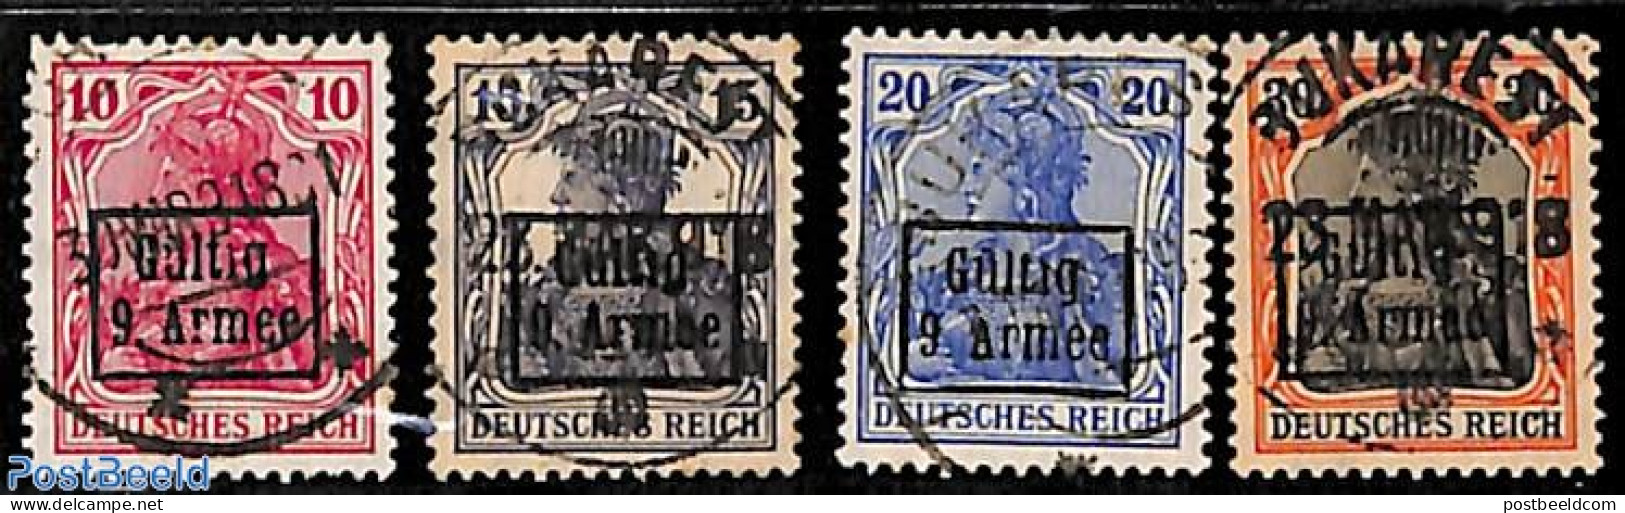 Romania 1918 Gültig 9. Armee Overprints 4v, Used Stamps - Usado